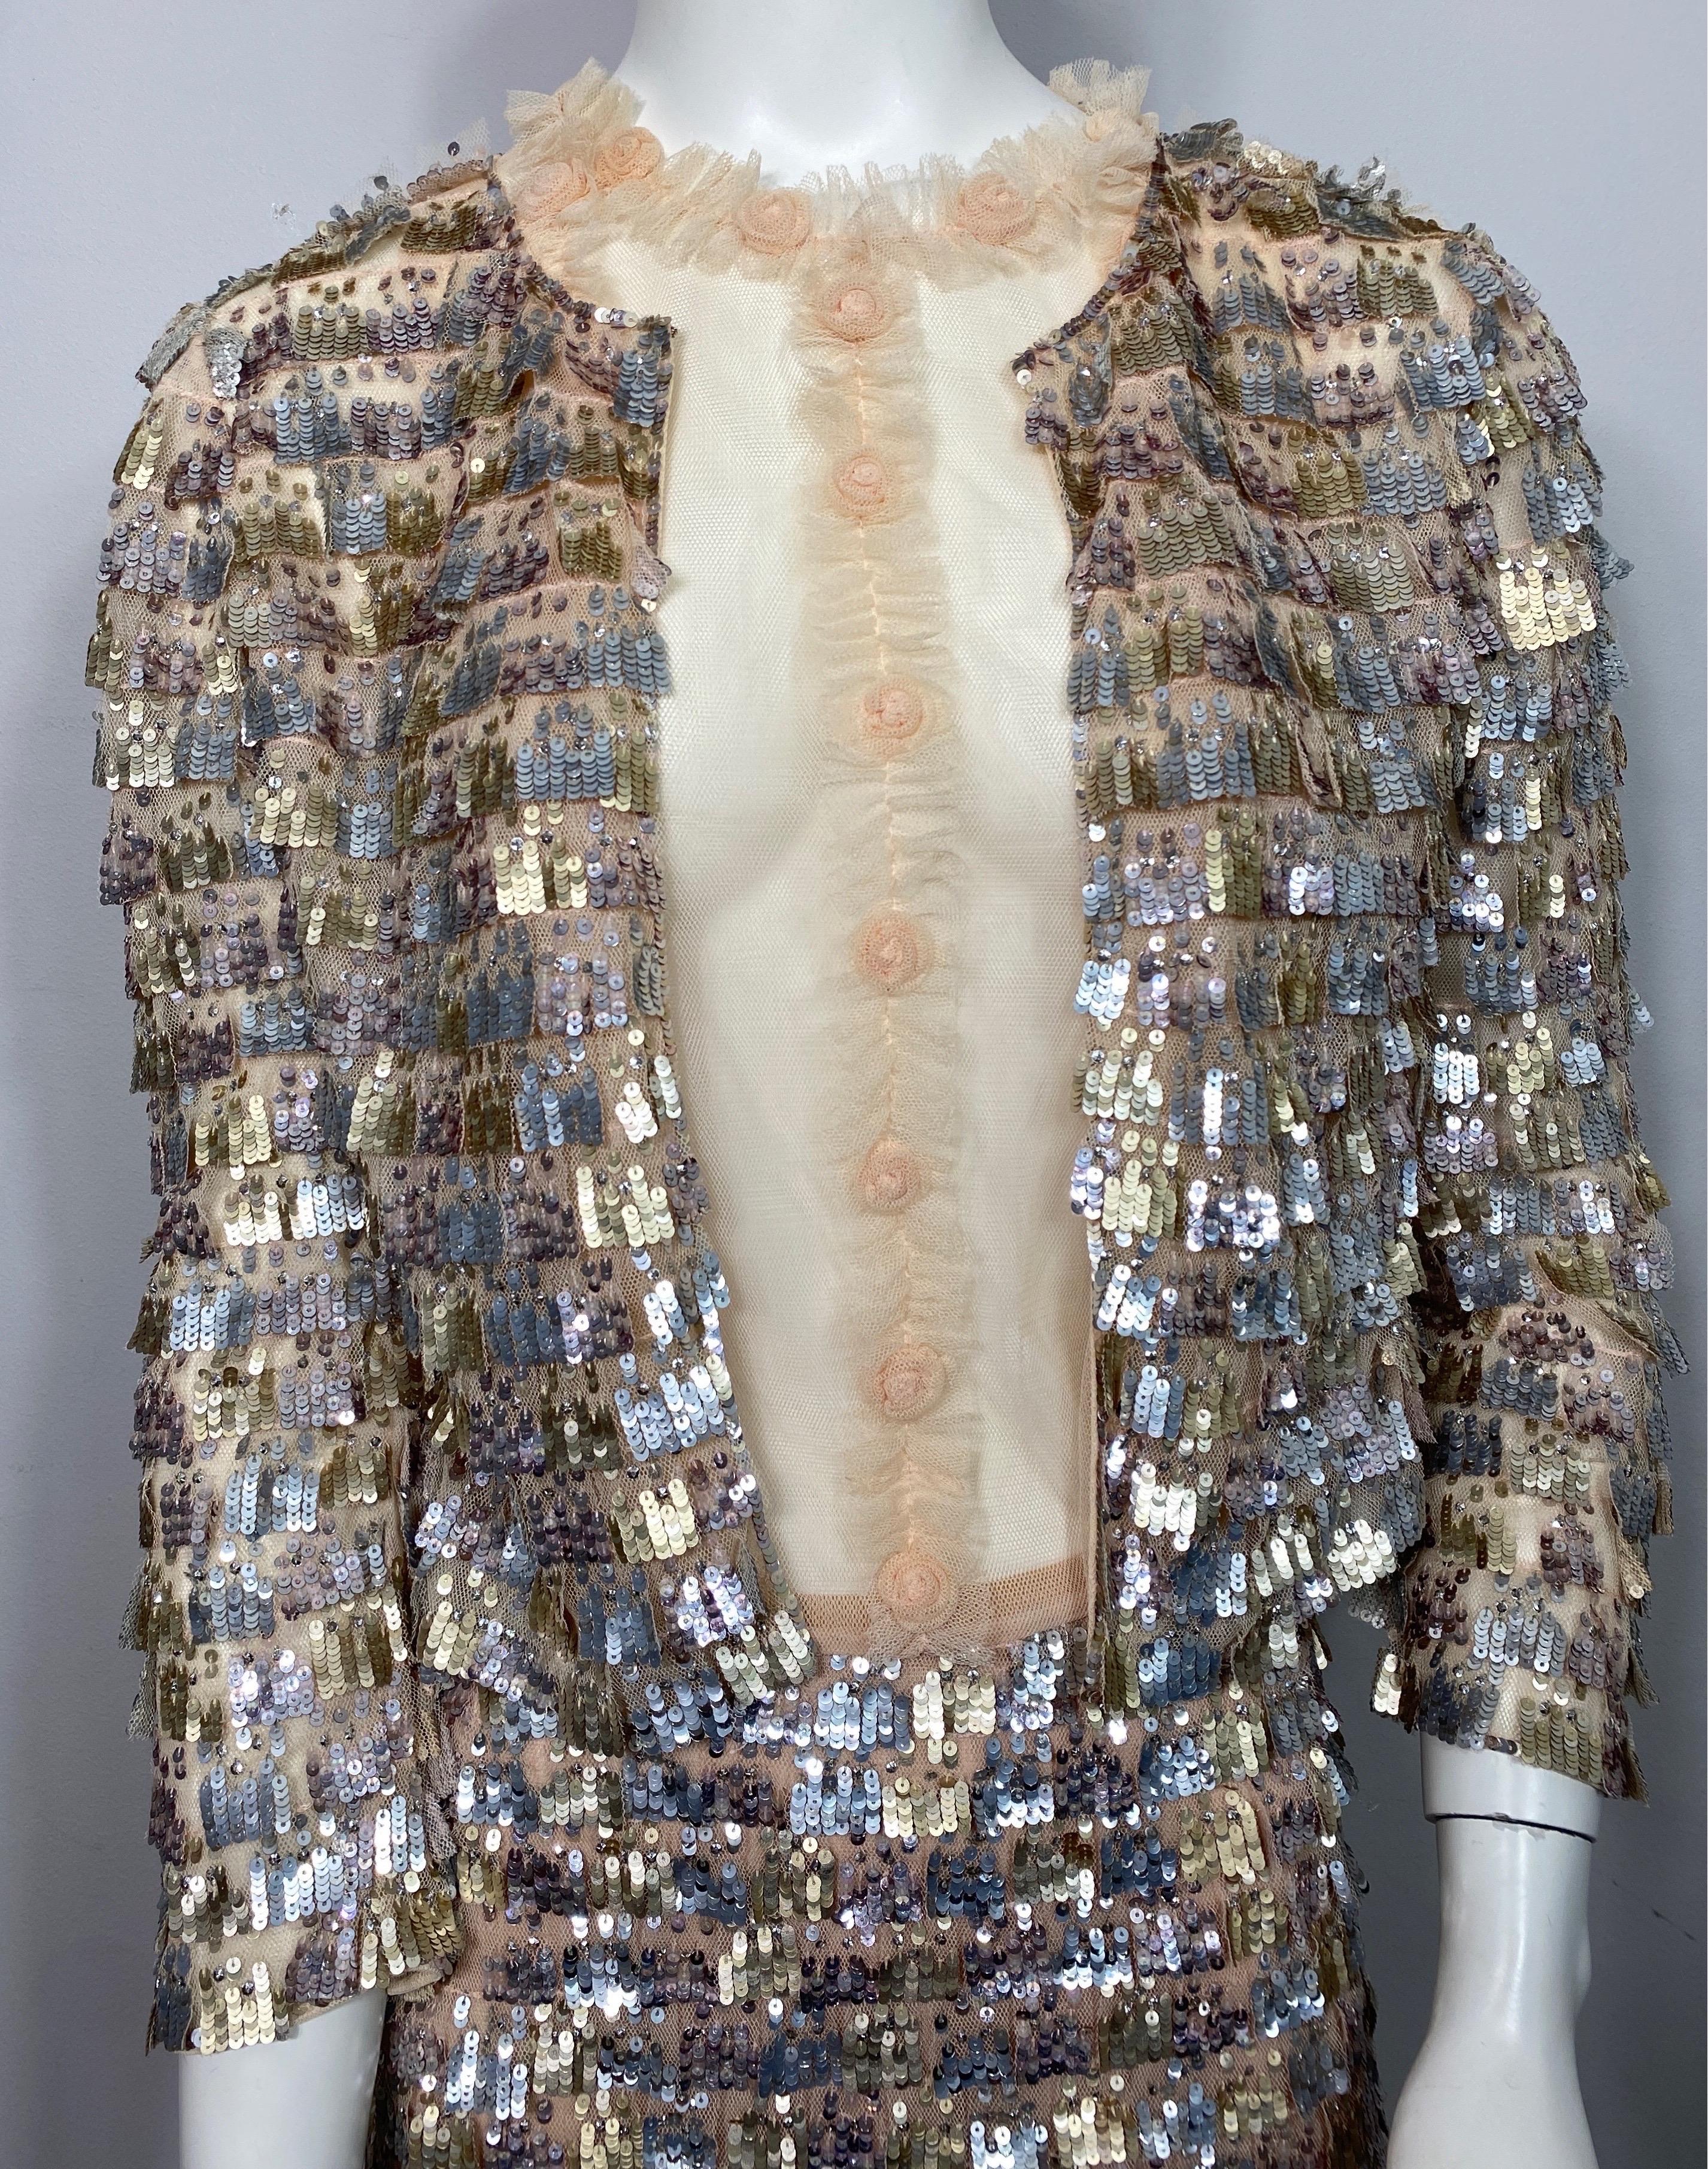 Oscar de la Renta Early 2000’s Nude and Metallic Gown with Jacket-Size 4 5